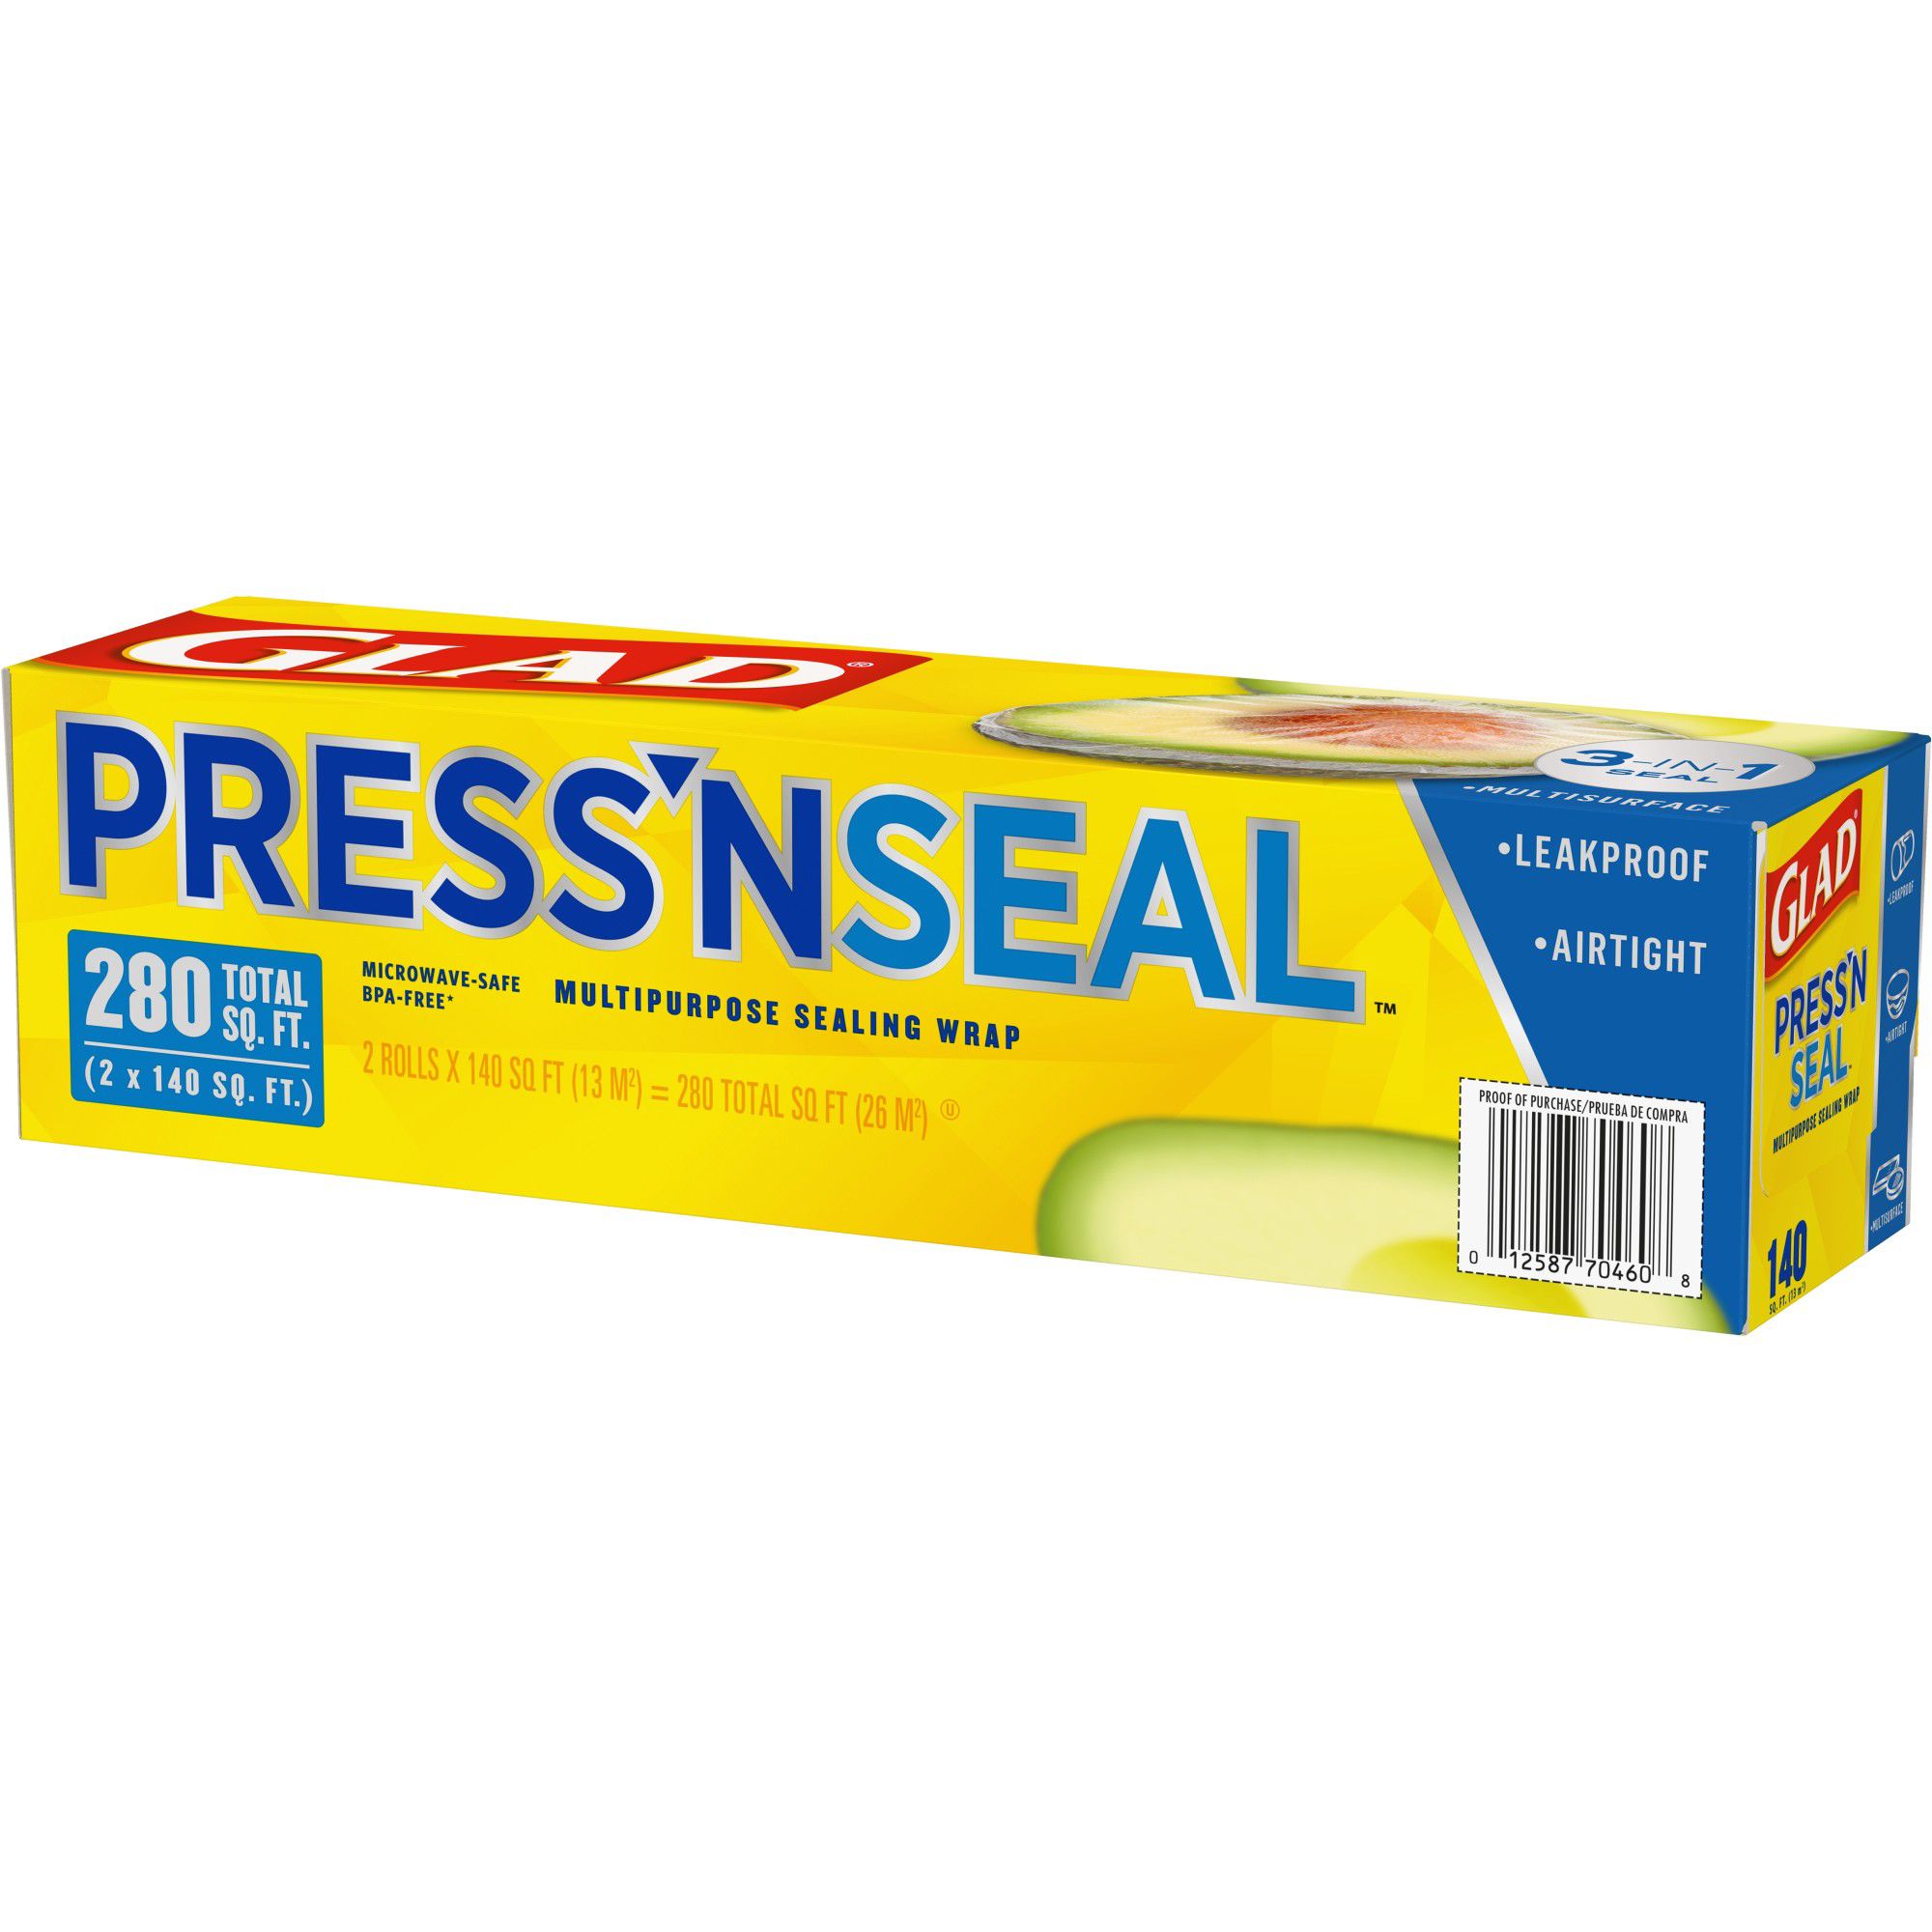 Glad Press'n Seal Plastic Multipurpose Food Wrap, 140 sq ft Roll